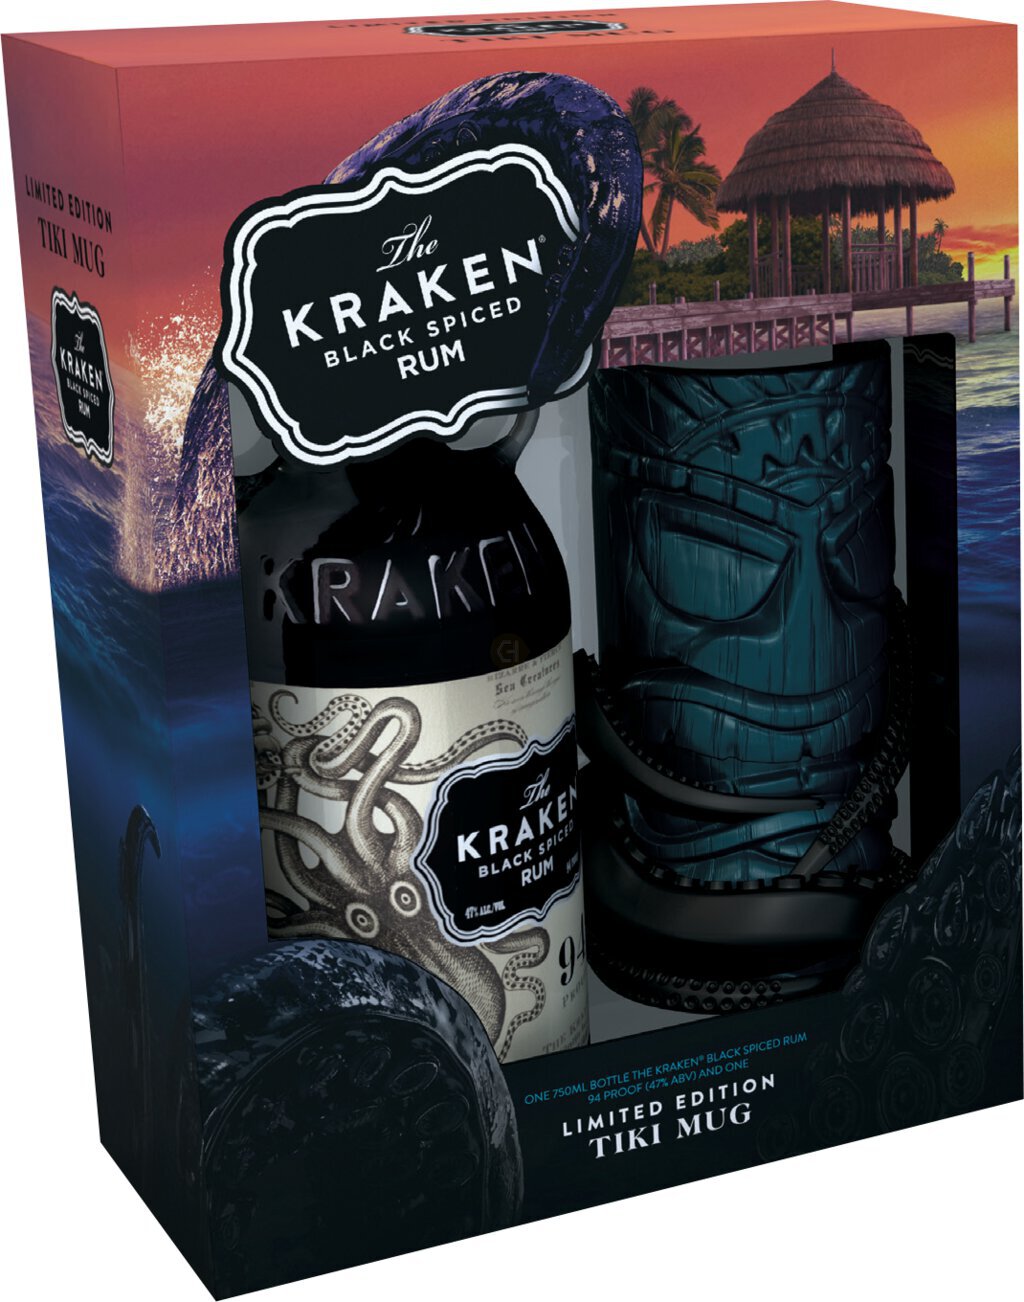 The Kraken Black Spiced Rum Original